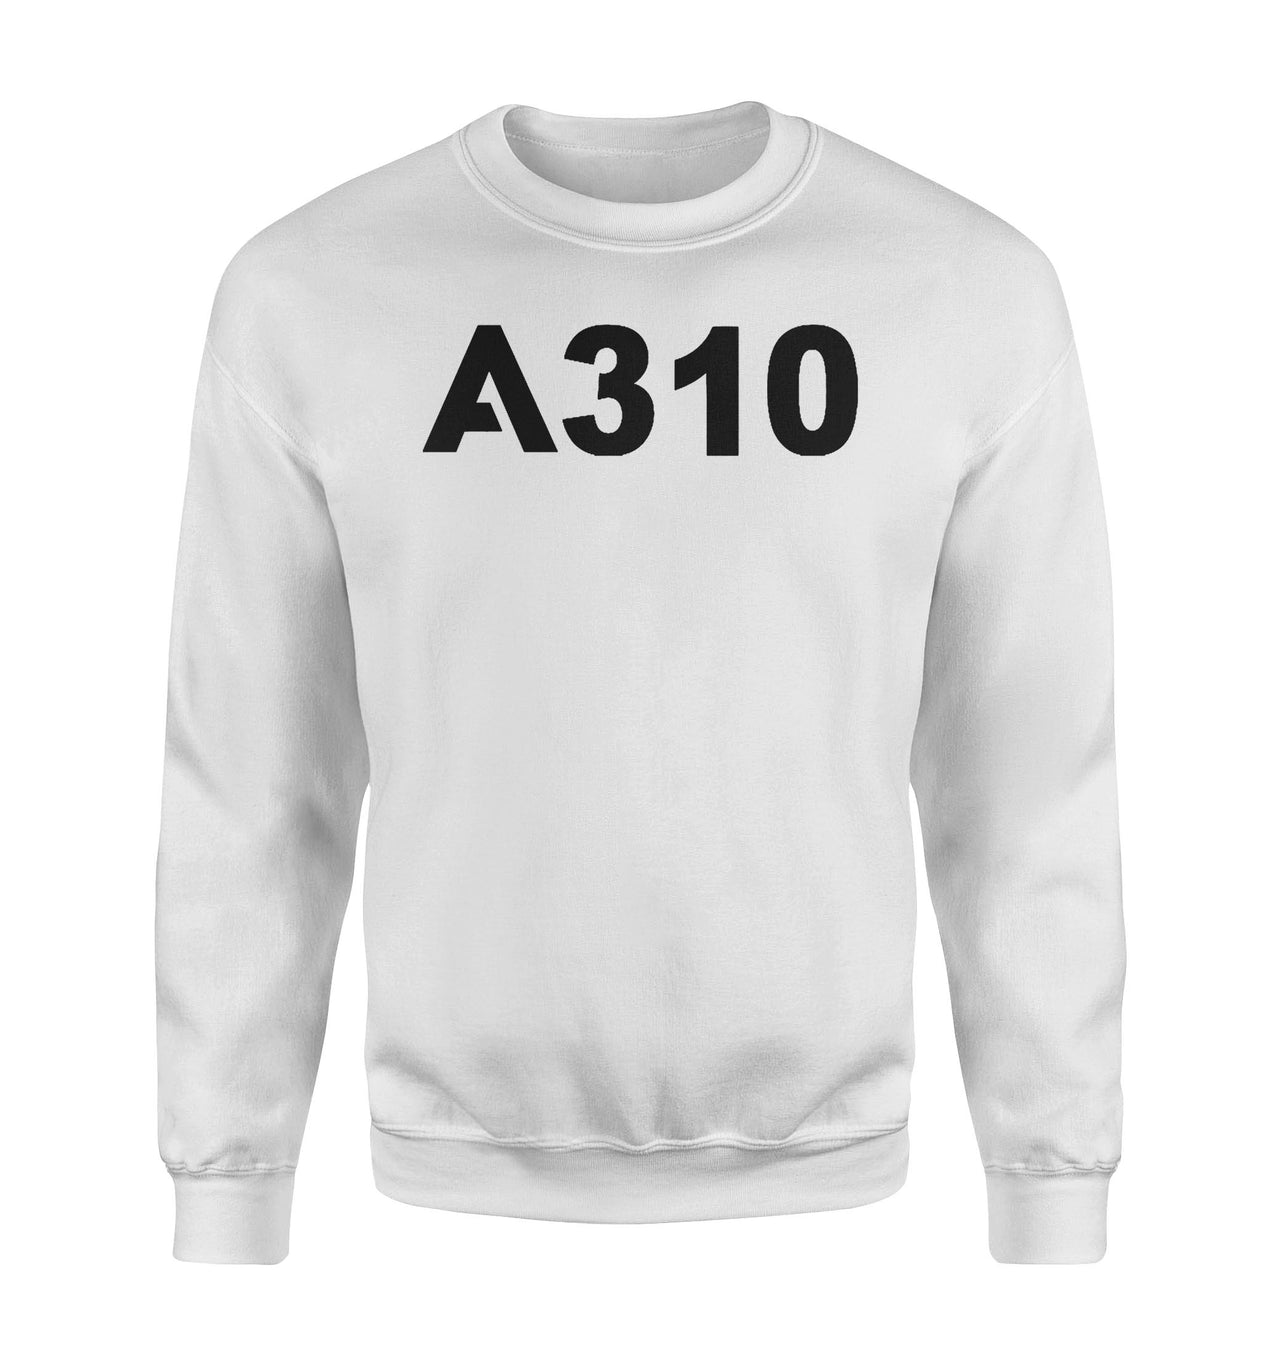 A310 Flat Text Designed Sweatshirts